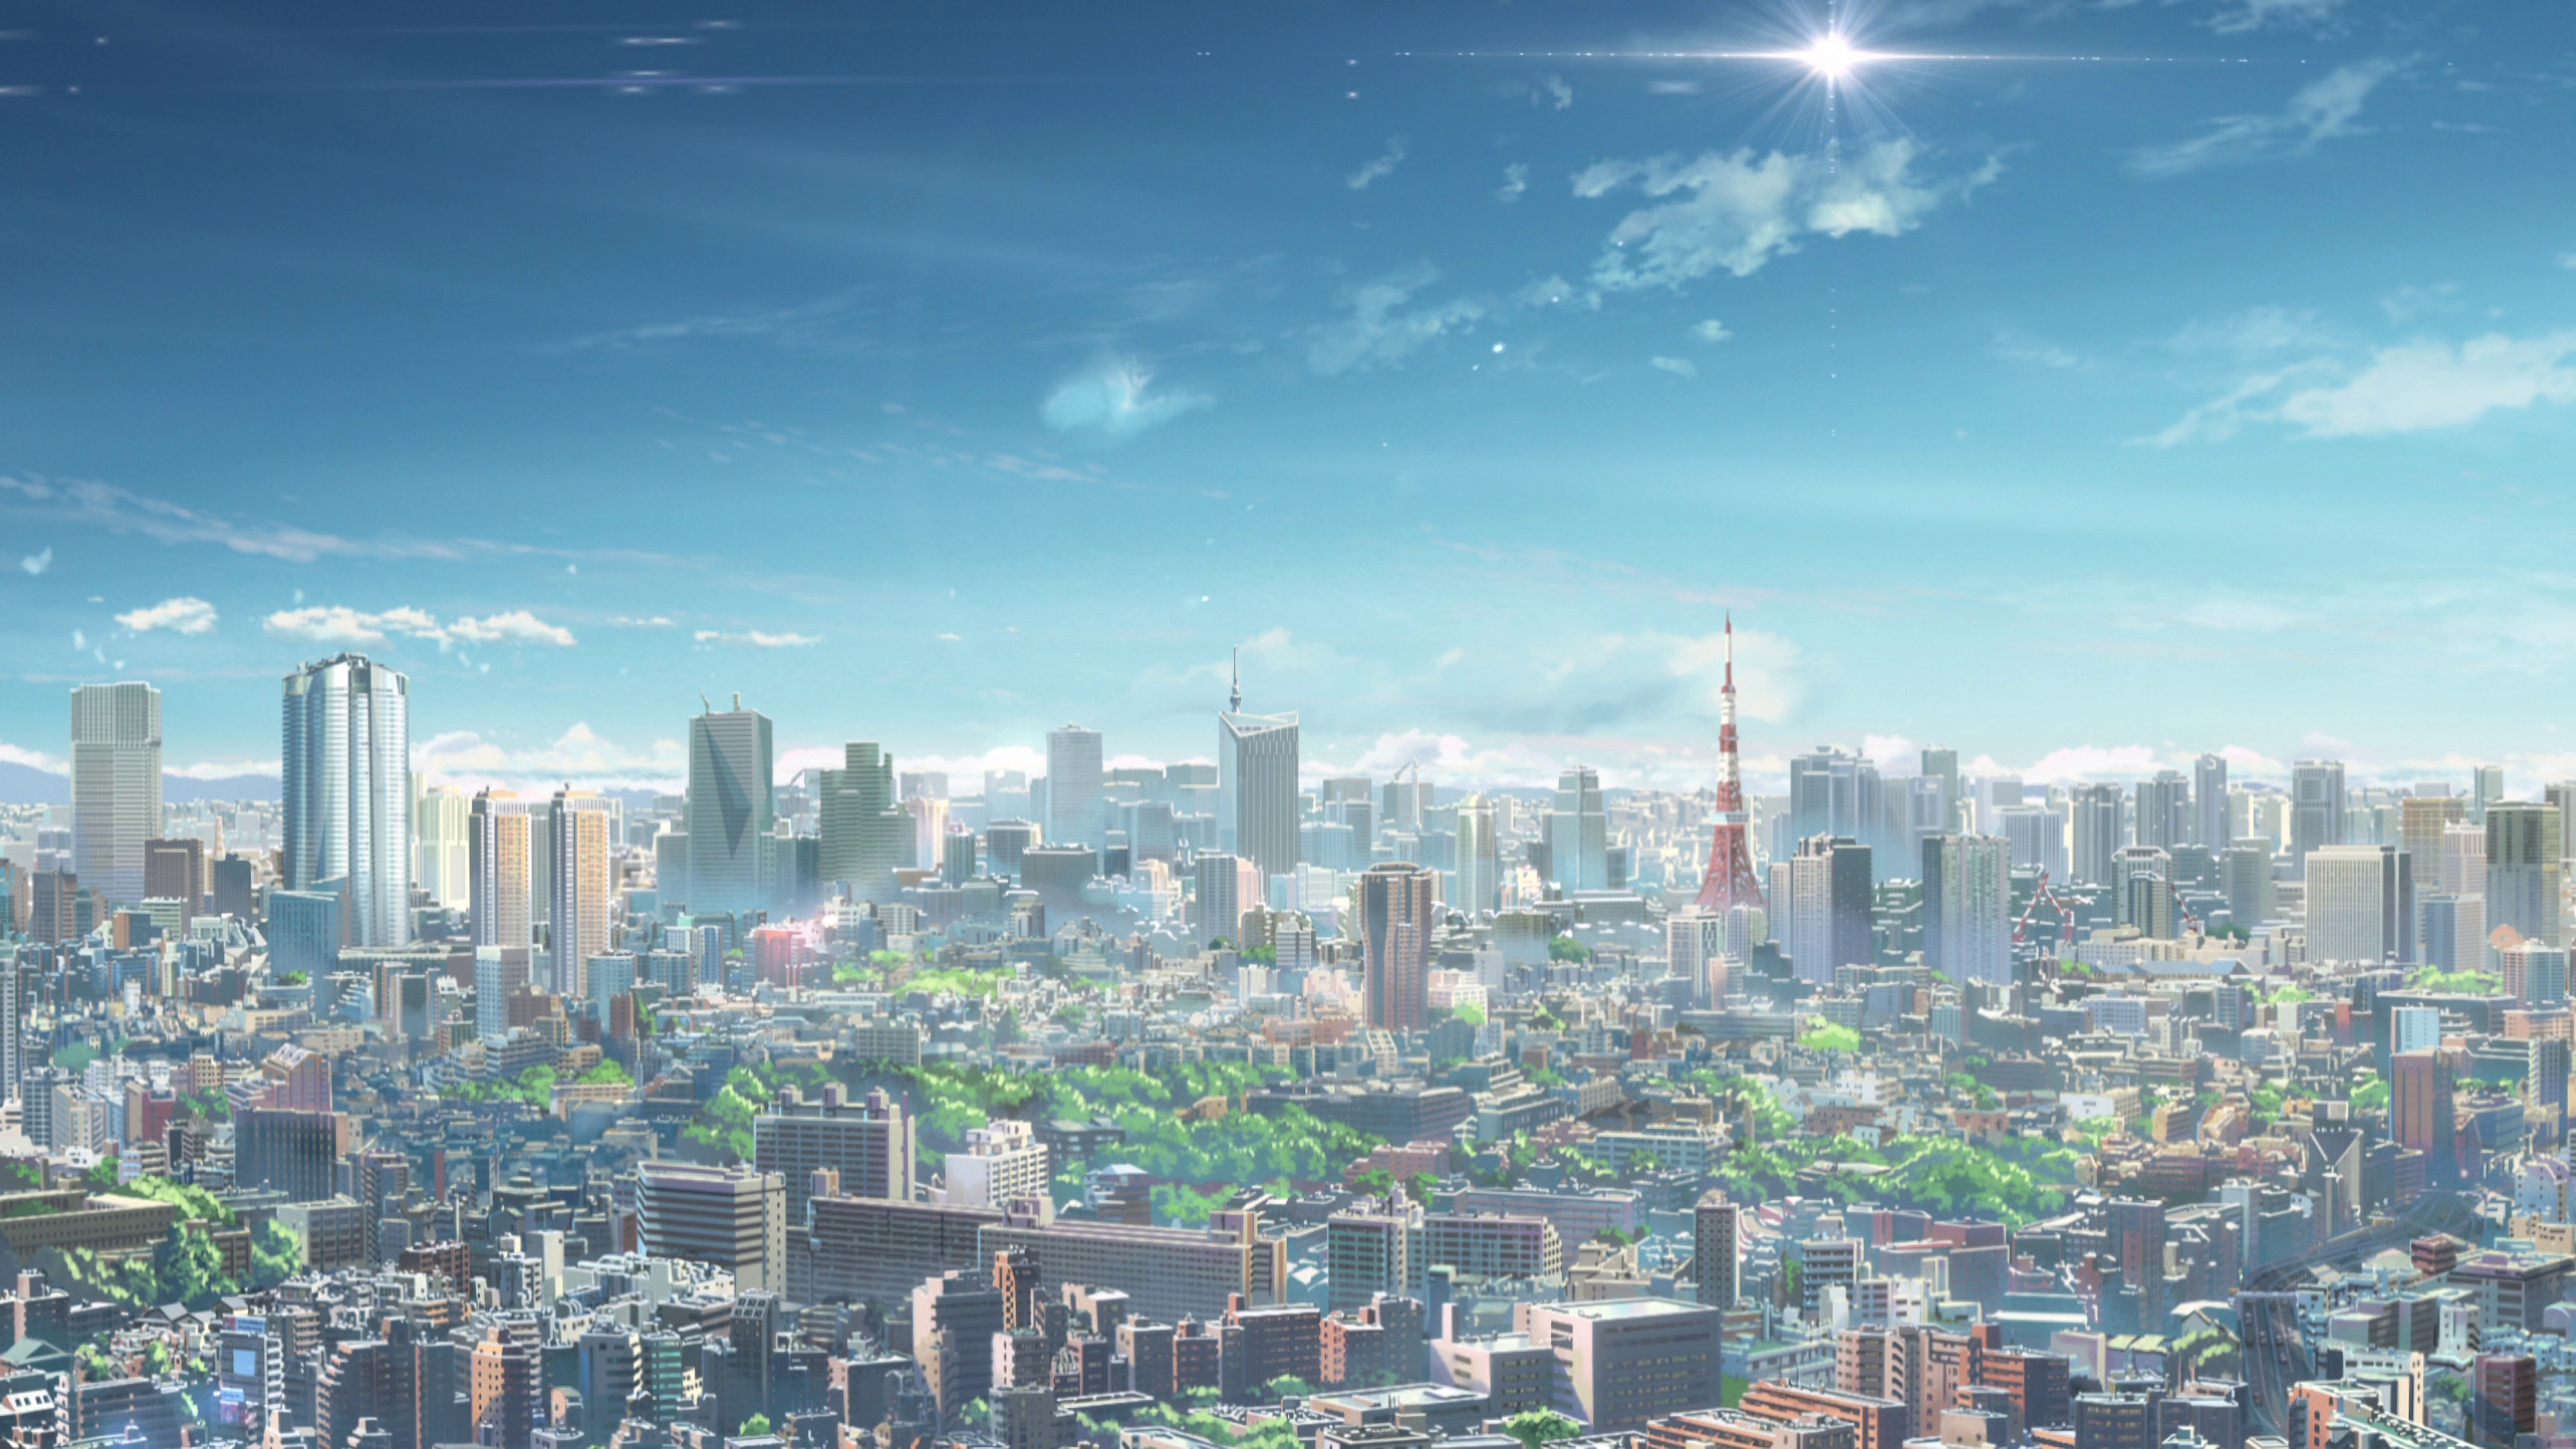 tokyo, your name, sun, anime, kimi no na wa, sky, skyline, tokyo tower